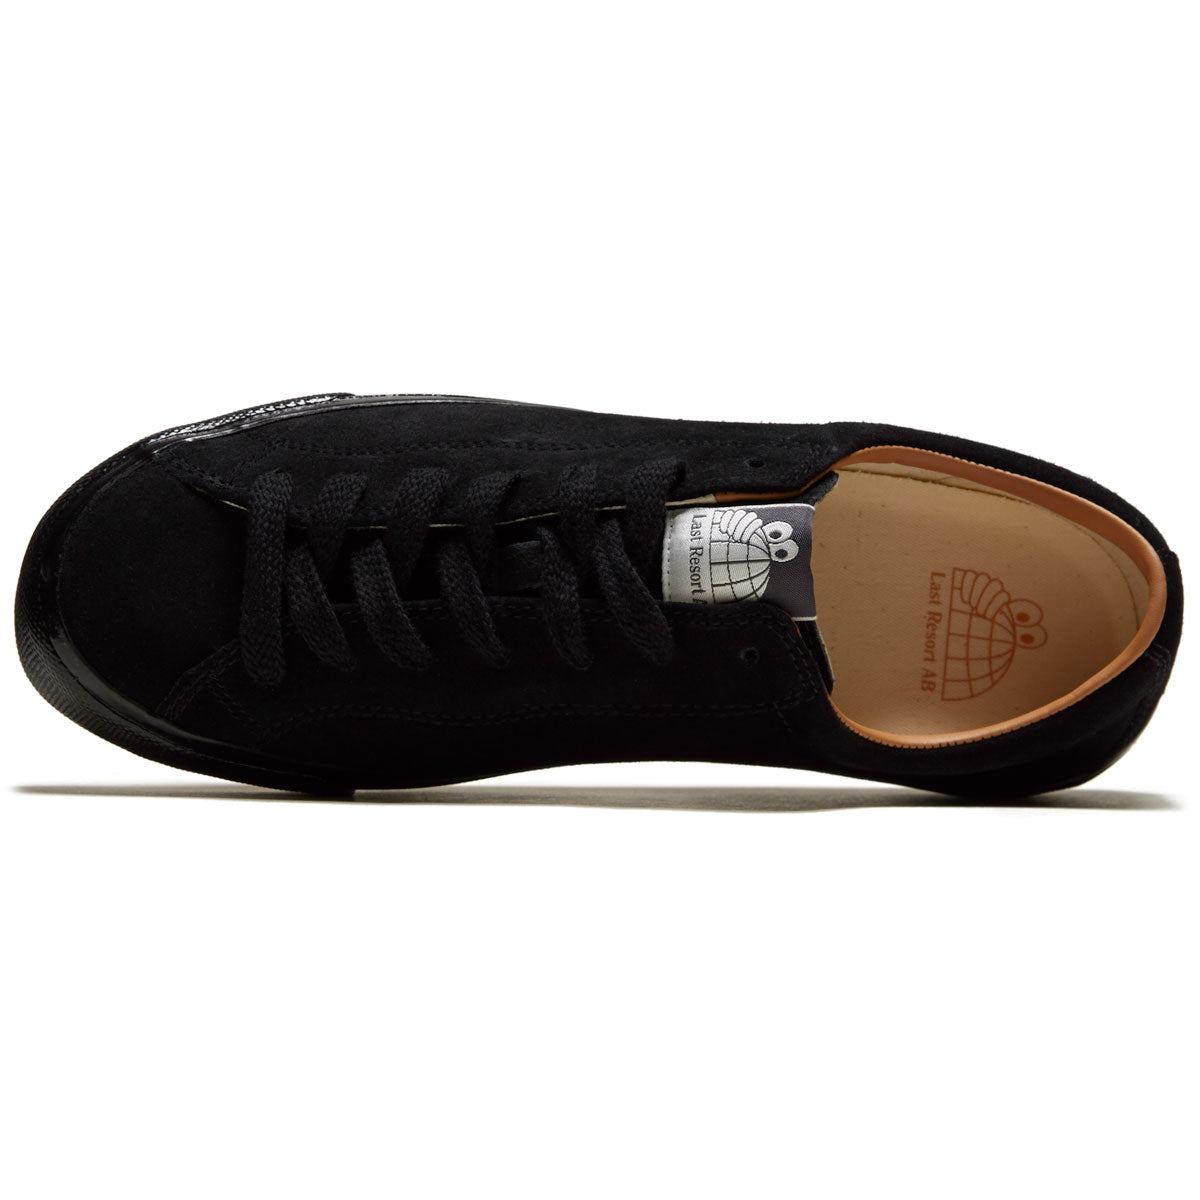 Last Resort AB VM003 Suede Low Shoes - Black/Black/Black image 3